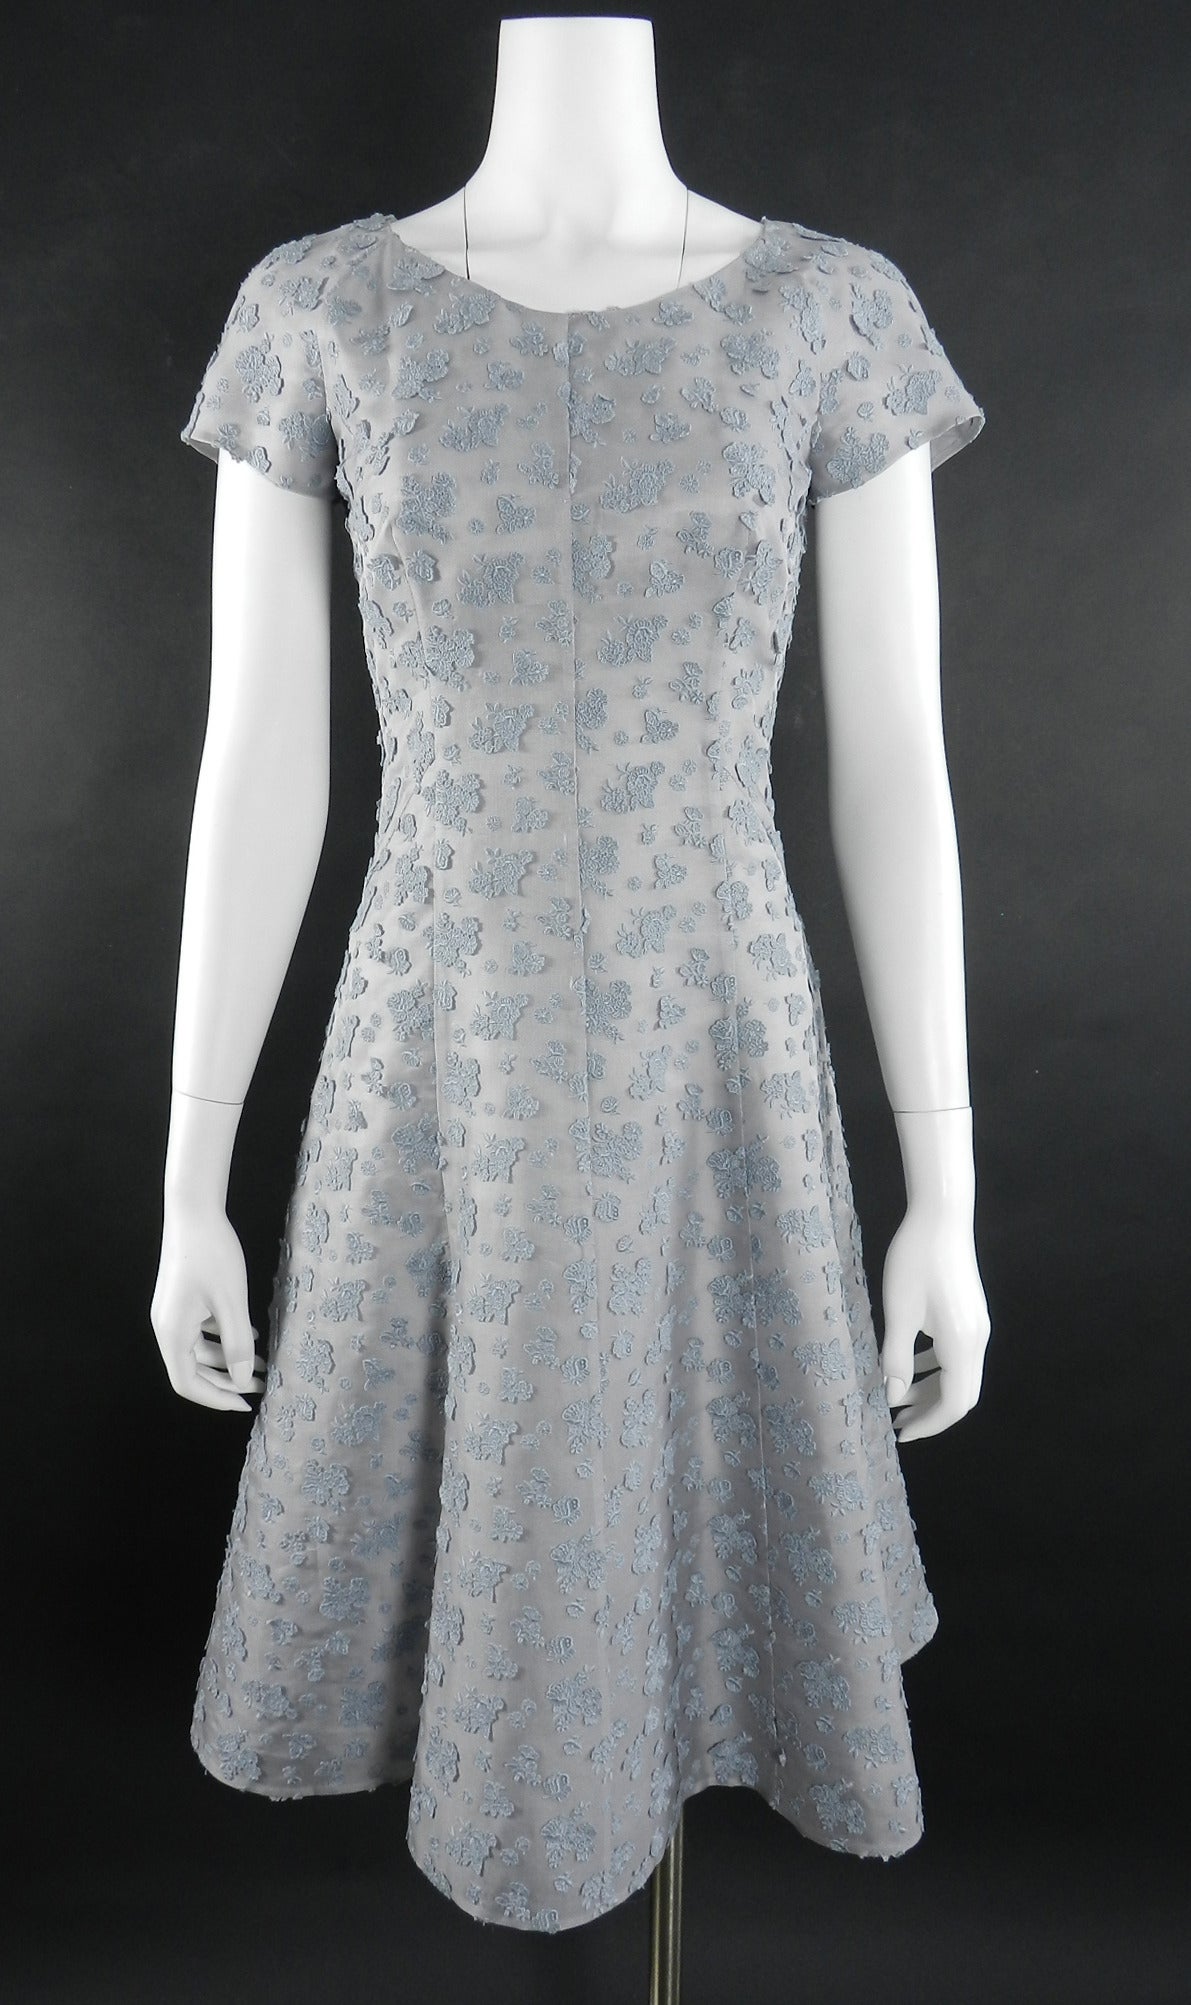 Prada Periwinkle Blue Sheer Overlay Embroidered Dress 2